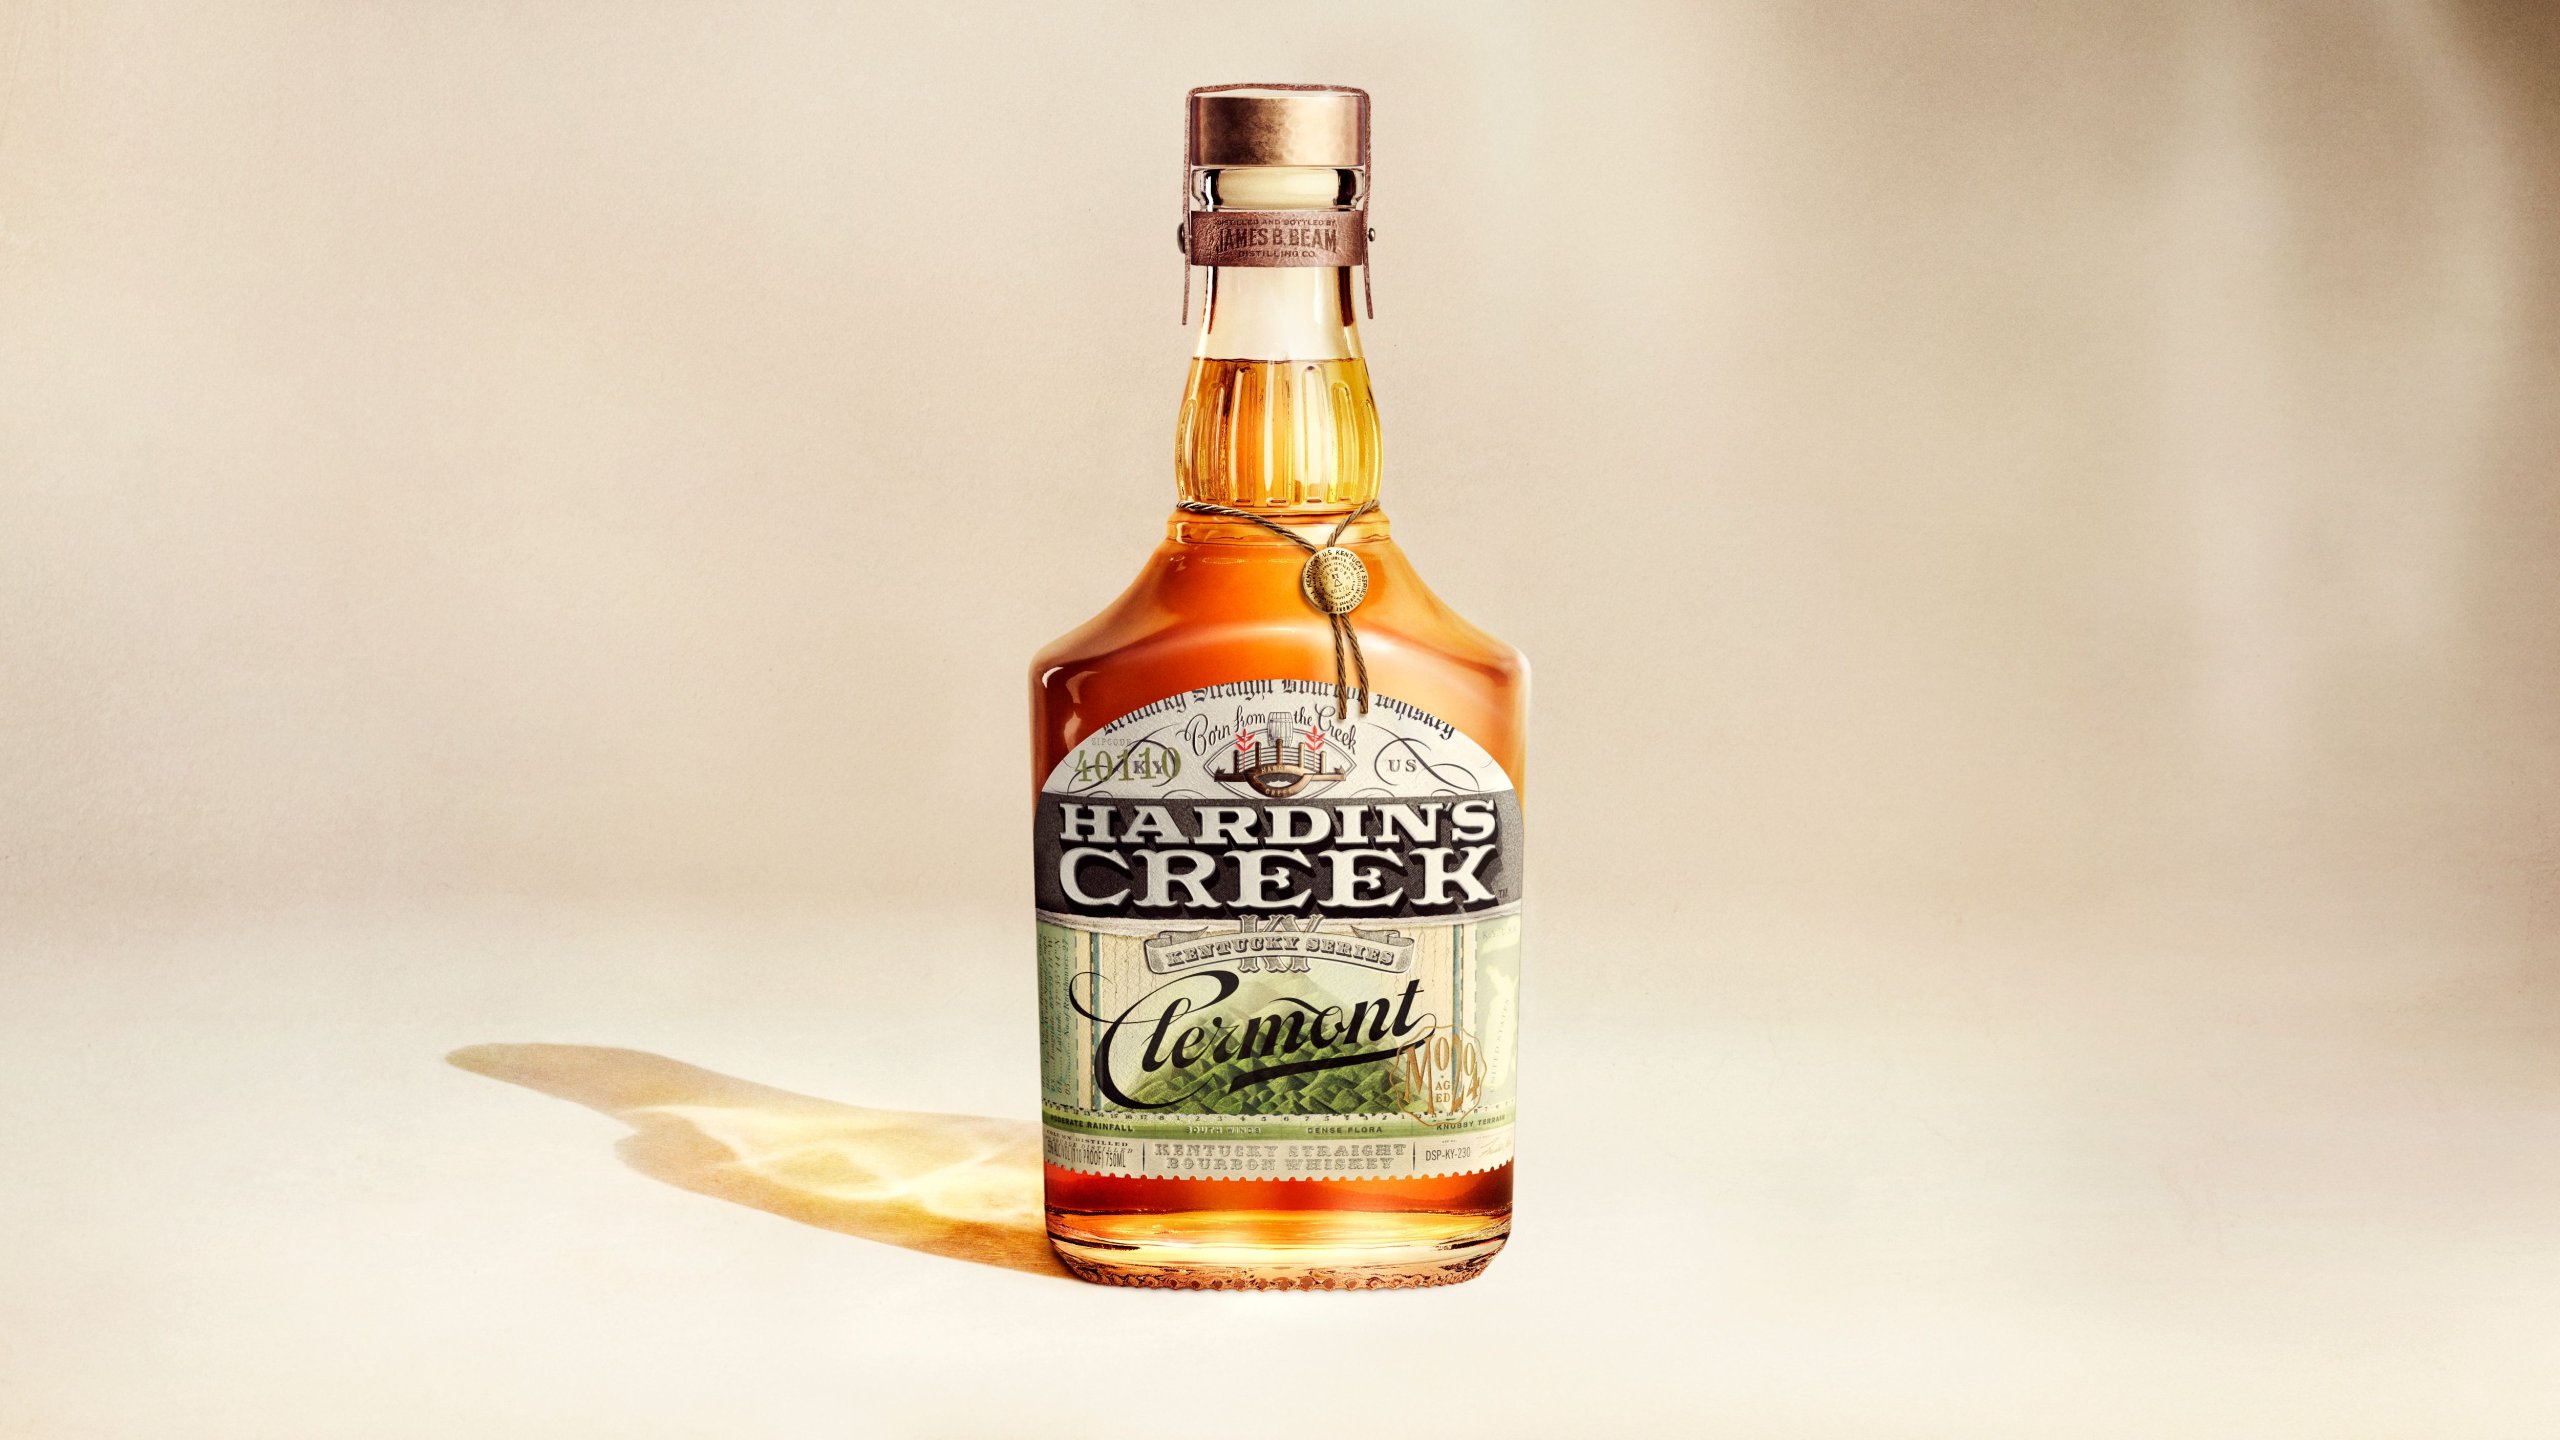 Hardin's Creek Clermont Edition Bourbon. Image courtesy Beam Suntory.